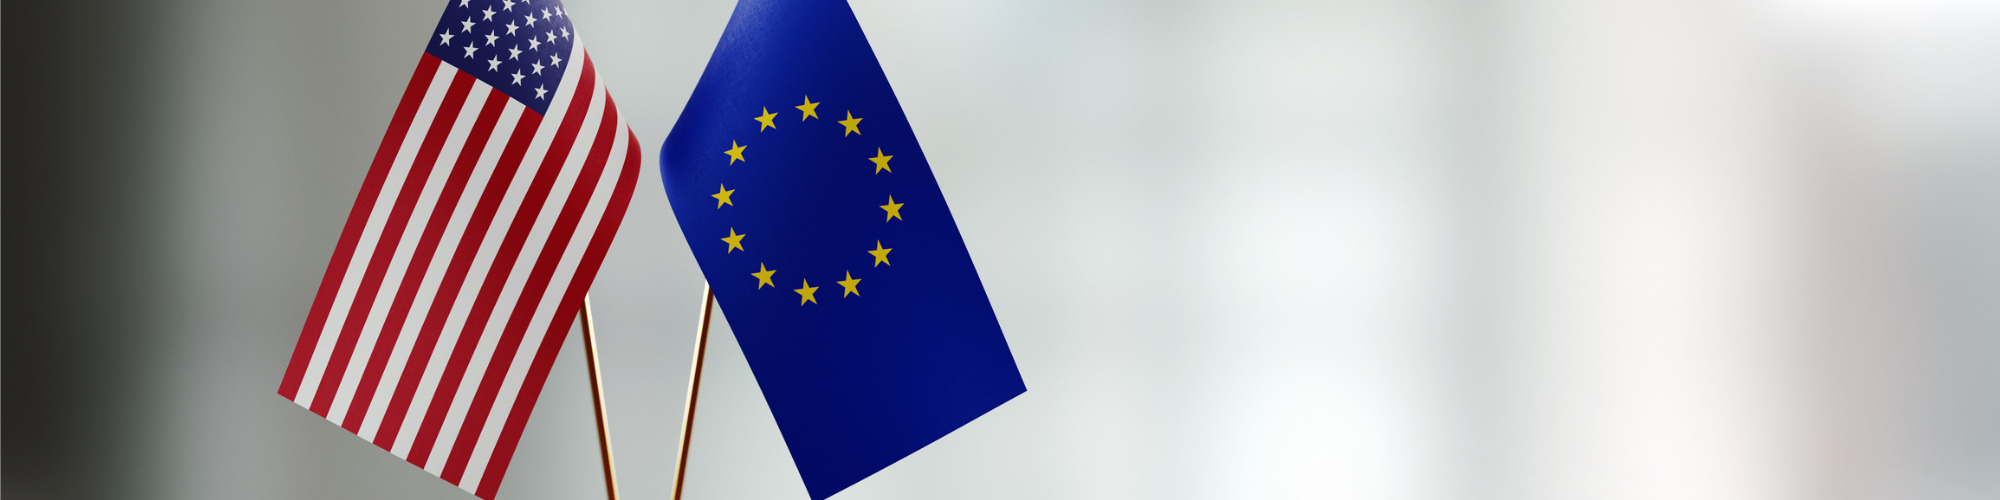 EU-US Data Privacy Framework - The Opportunities & Limitations